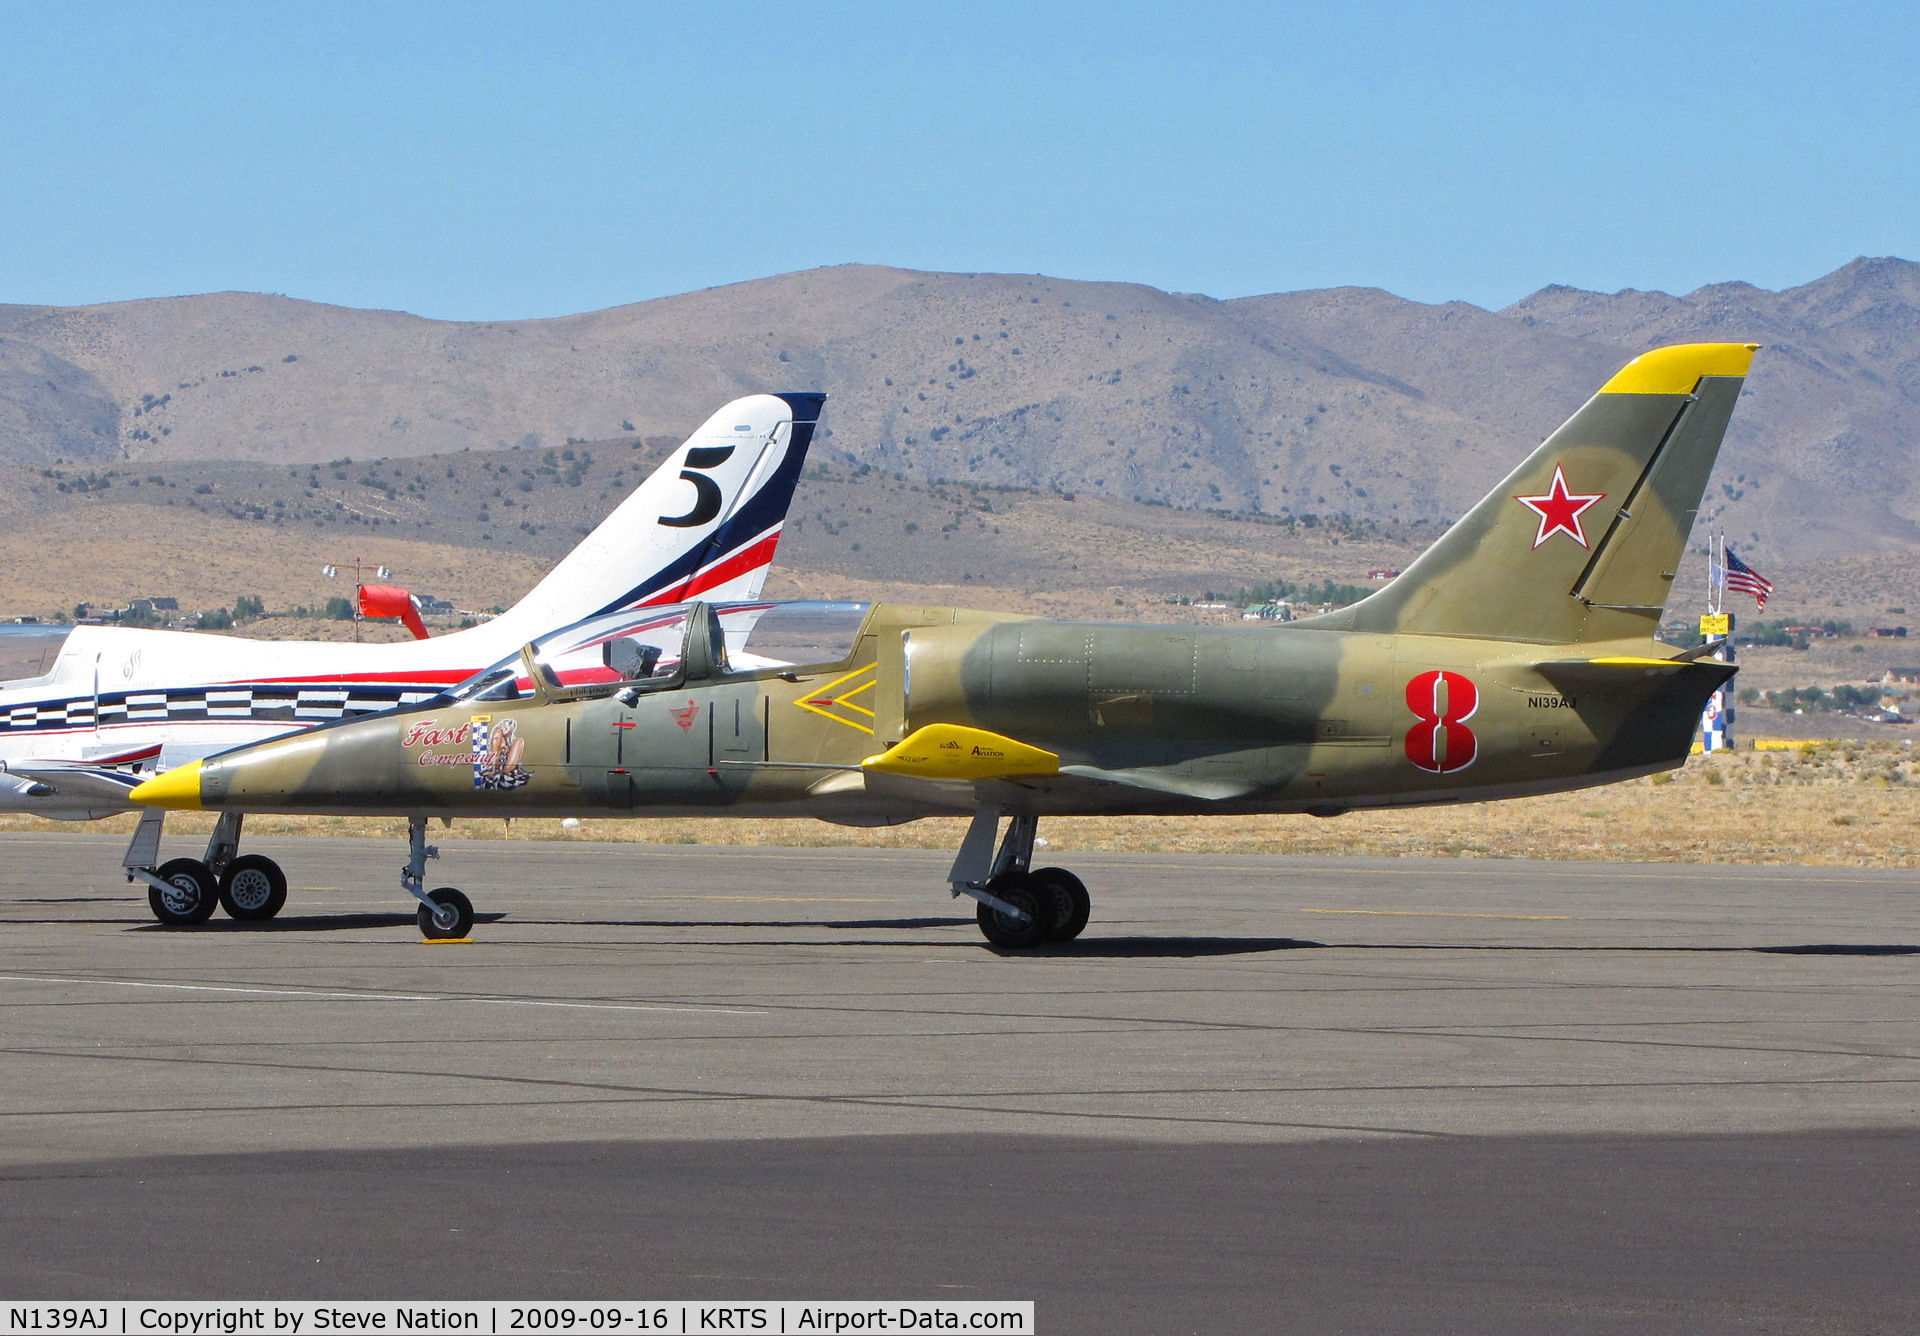 N139AJ, 1974 Aero L-39 Albatros C/N 330214, Race #8 1974 Aero Vodochody L-39 